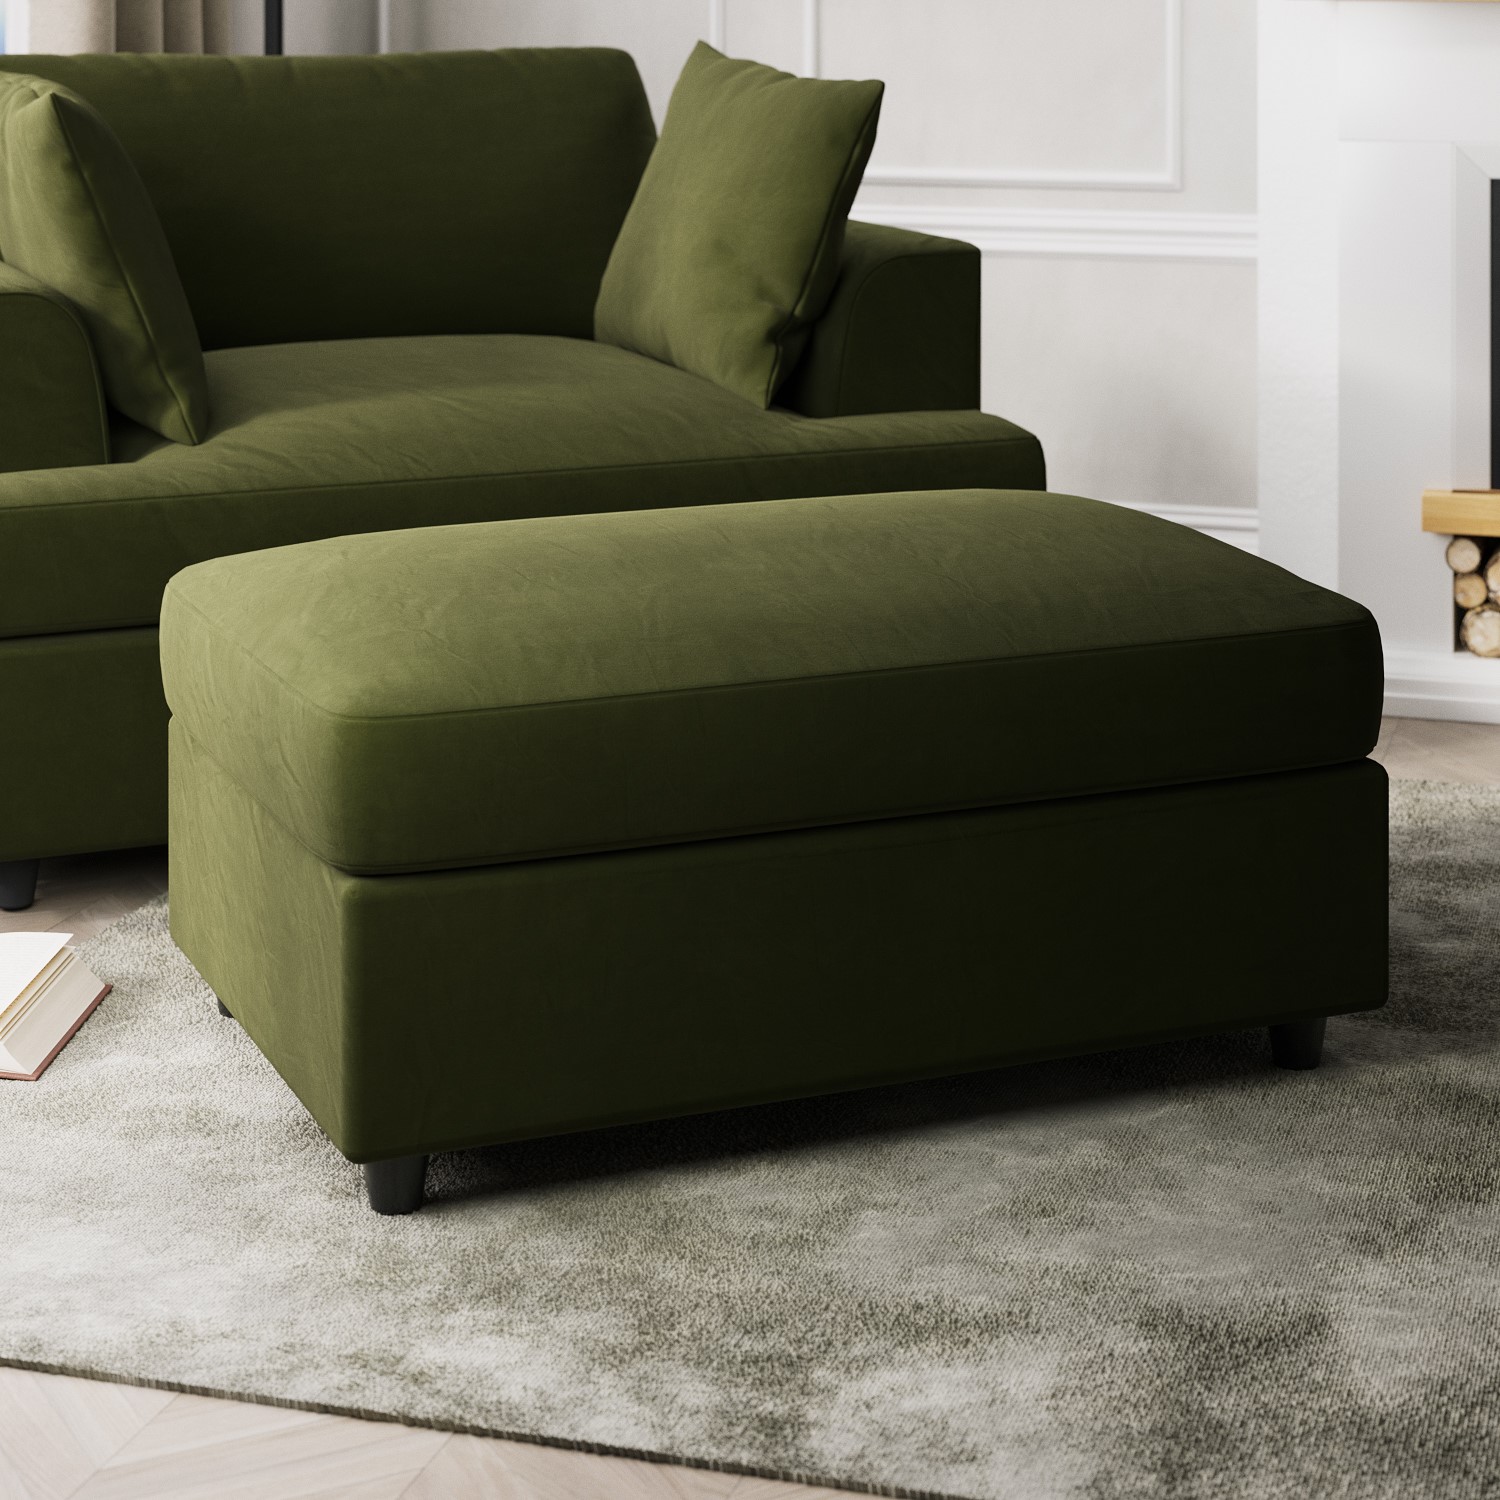 Photo of Large olive green velvet footstool - august